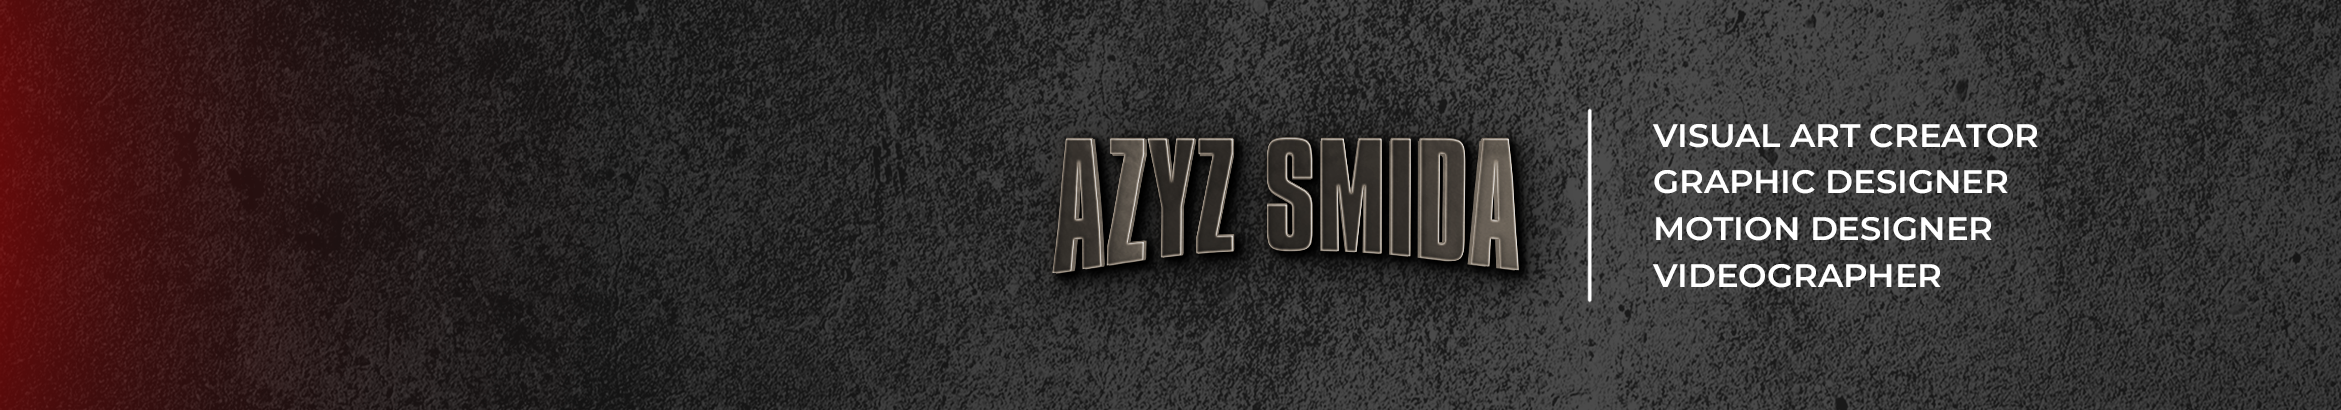 Azyz Smida's profile banner